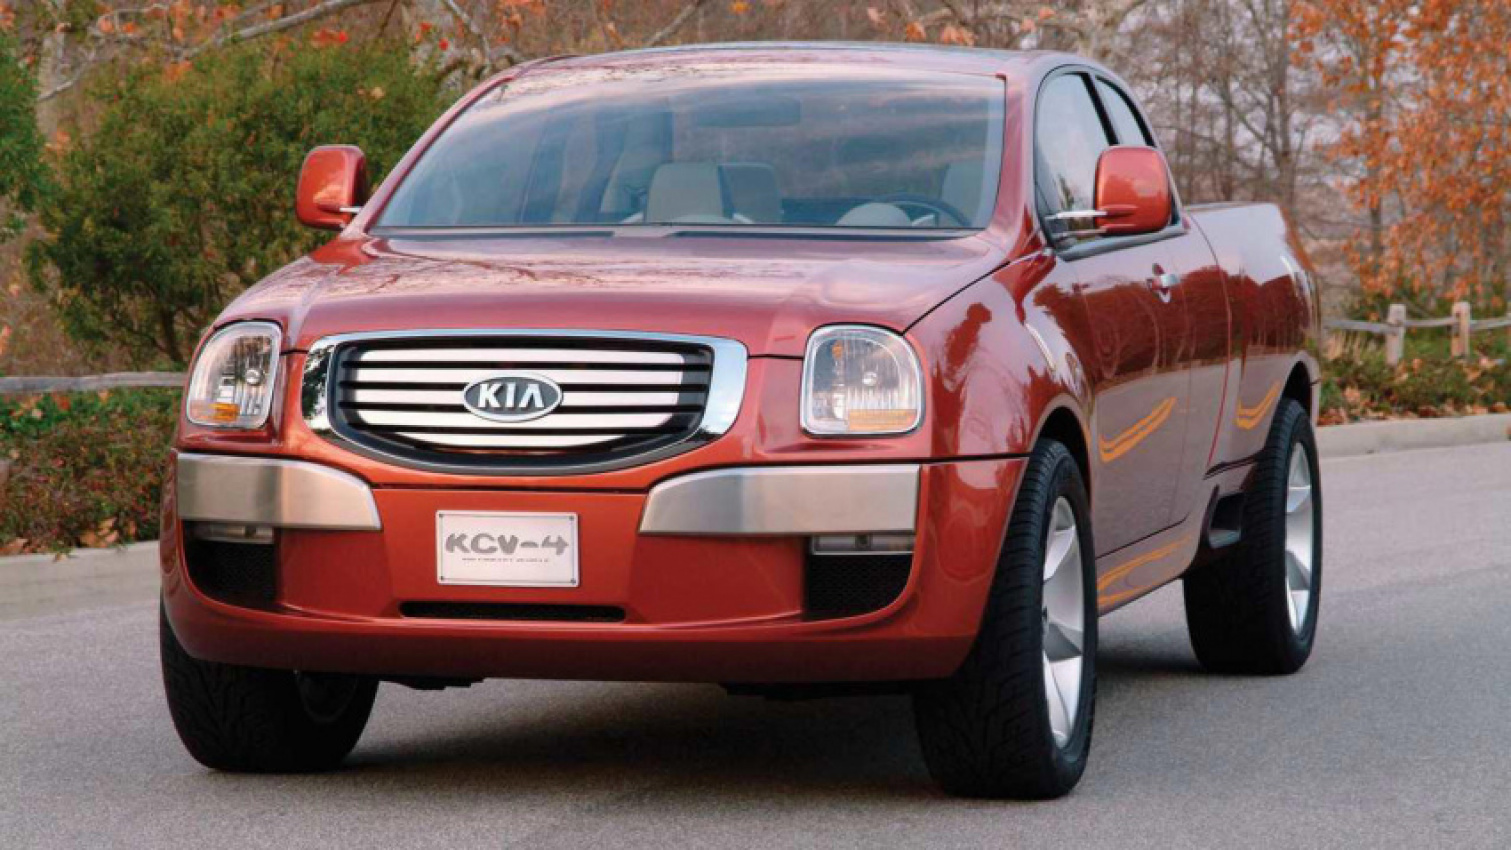 autos, cars, kia, prototipos olvidados: kia kcv4 mojave (2004)